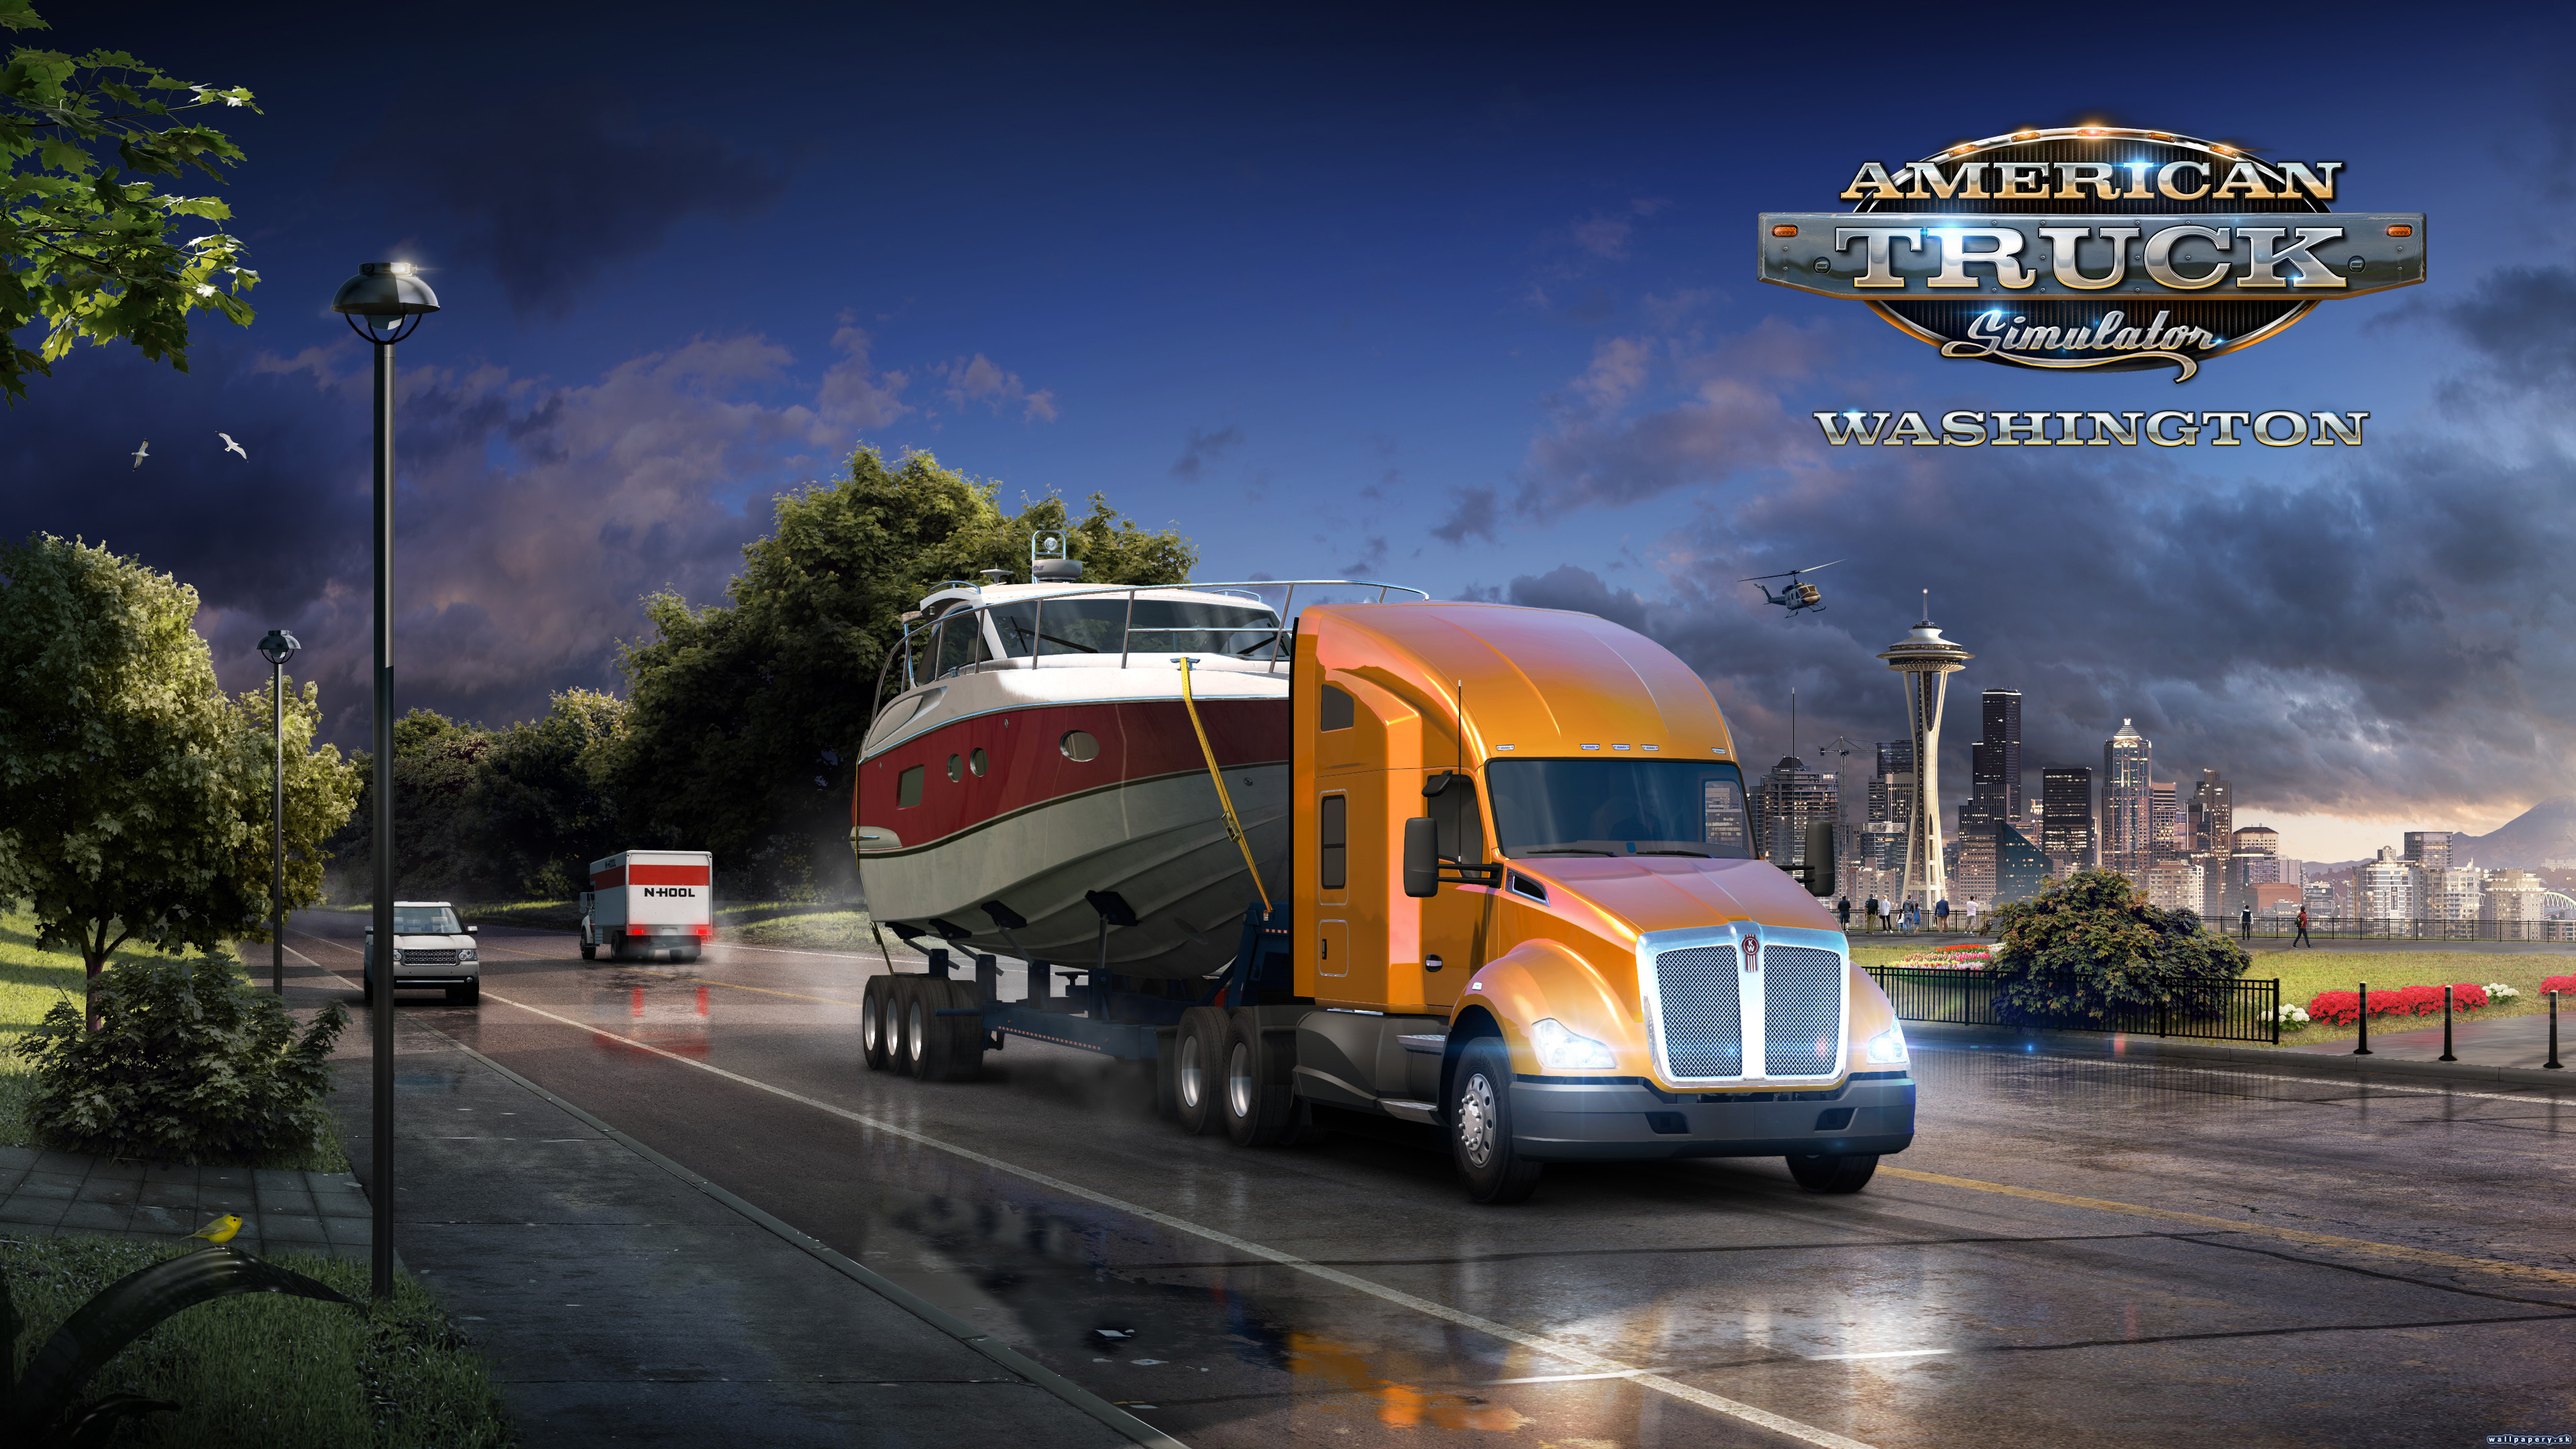 American Truck Simulator - Washington - wallpaper 1